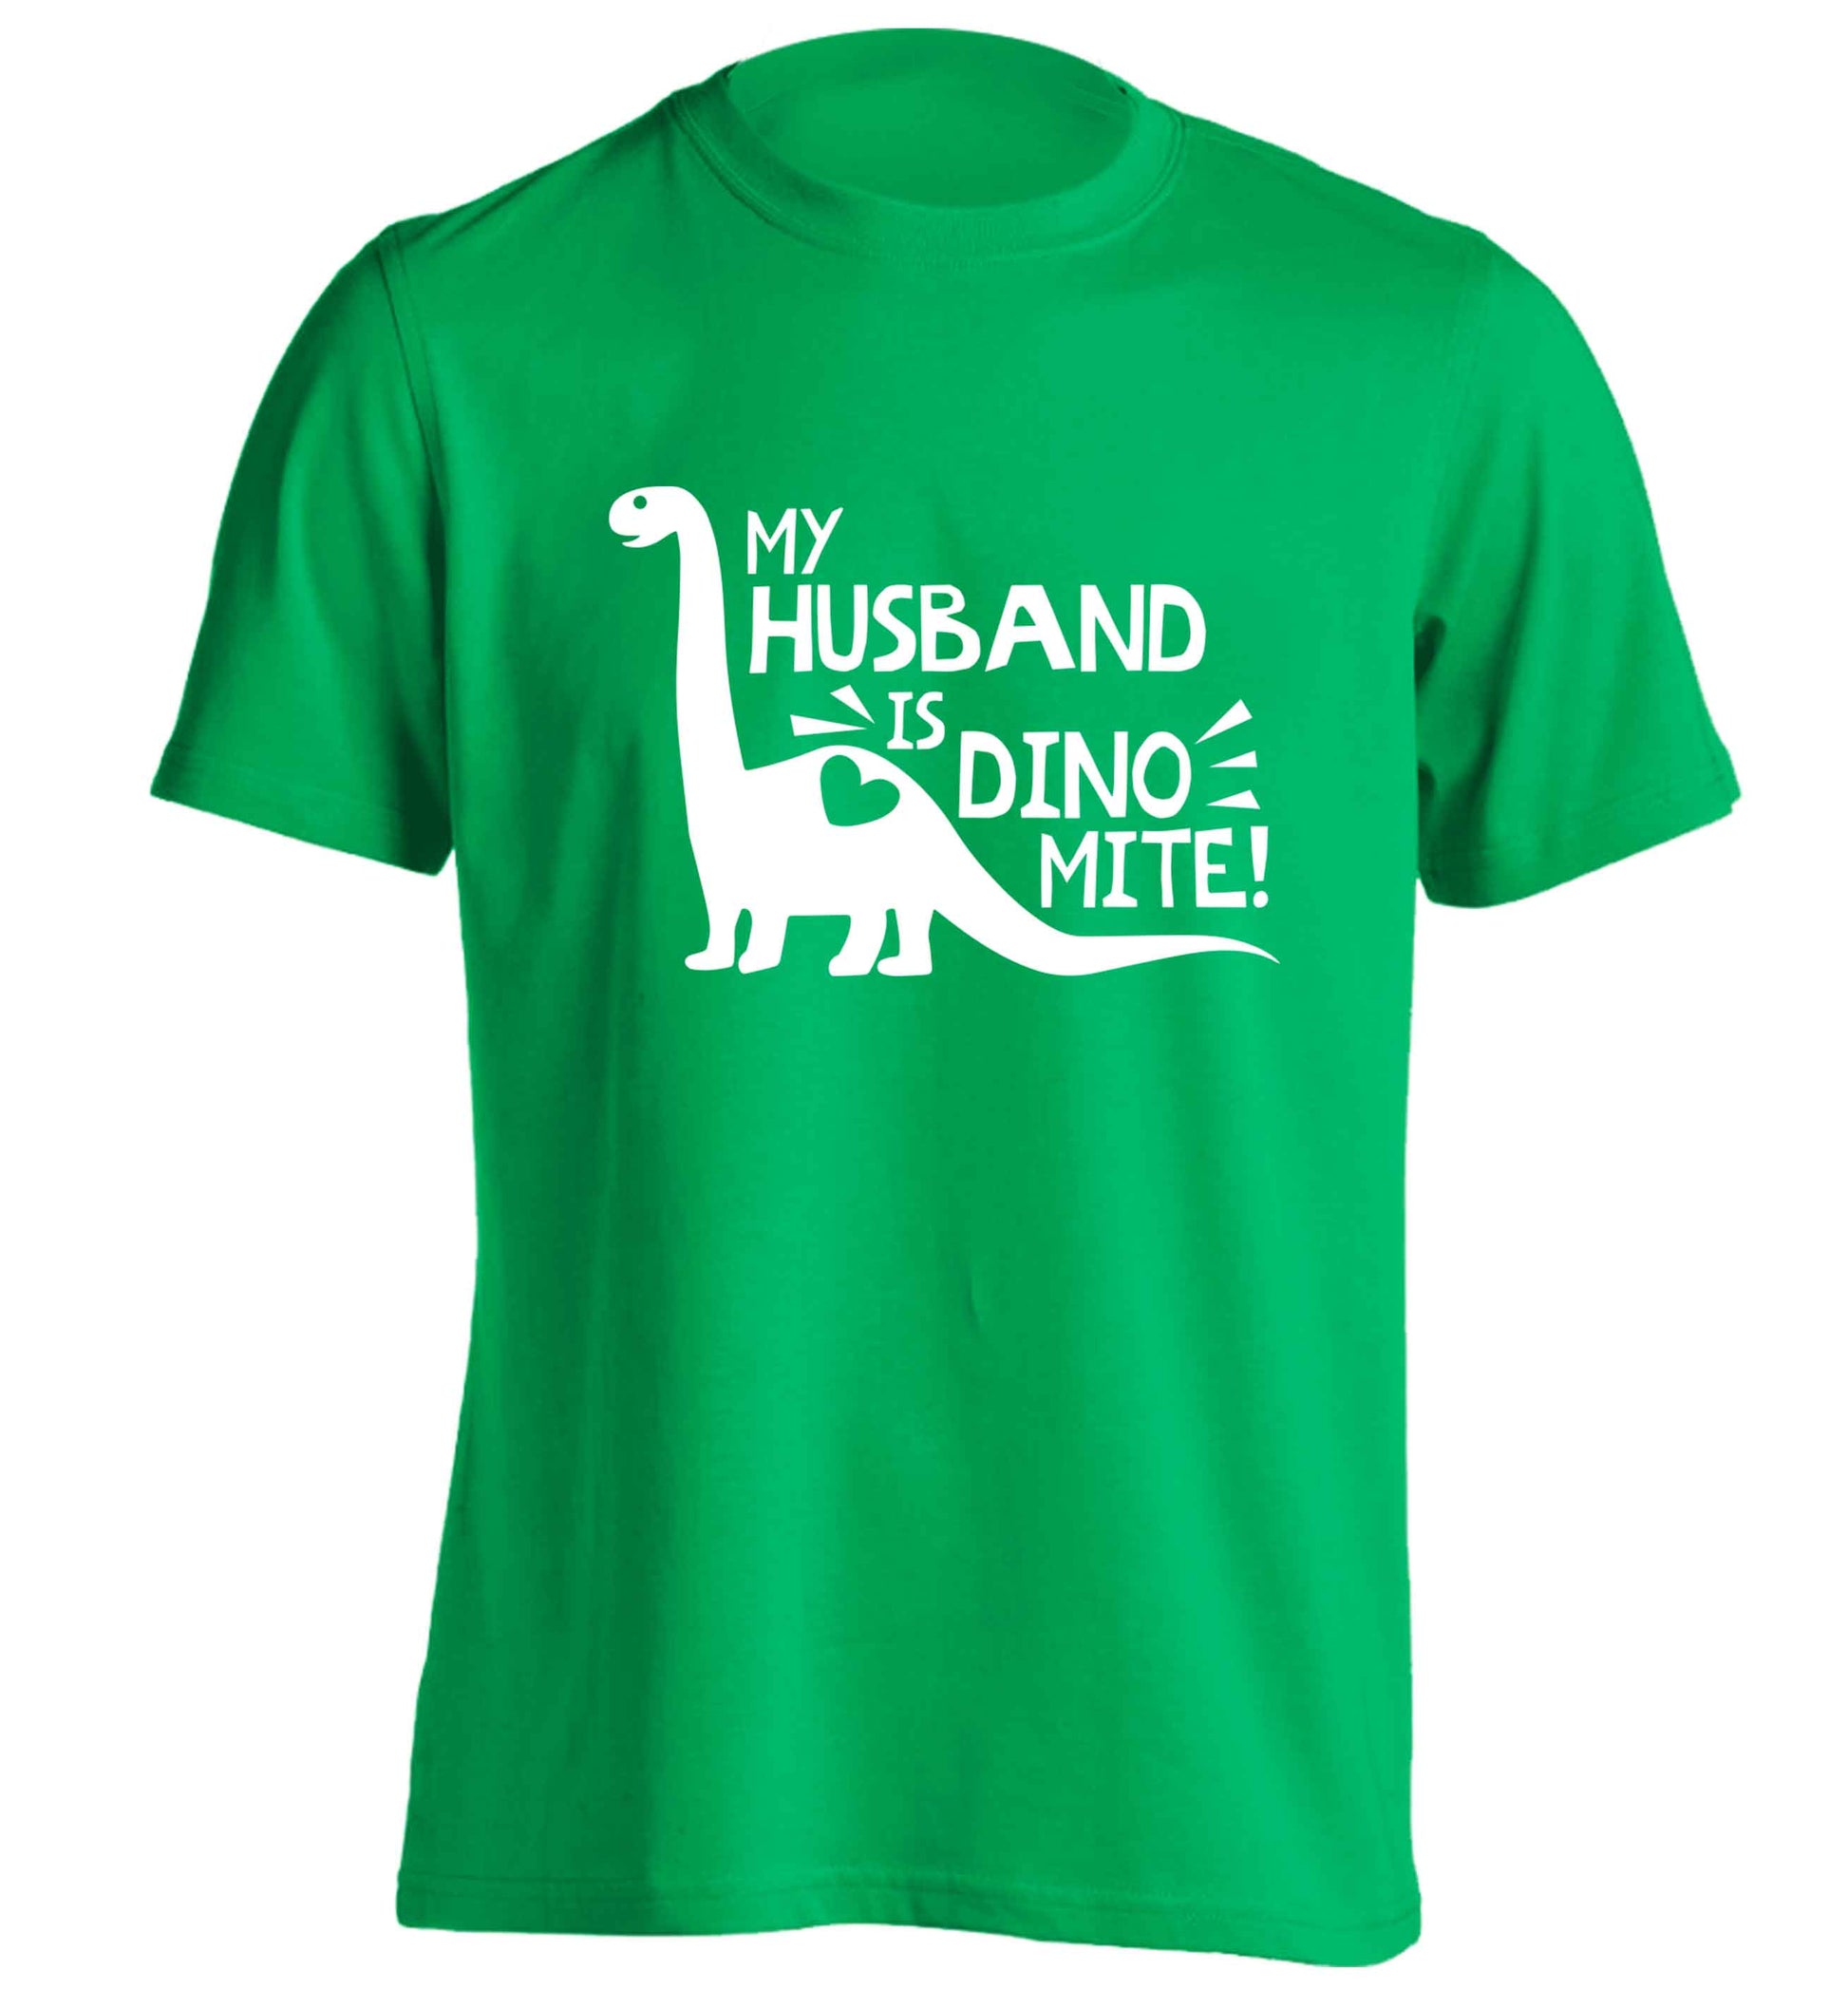 My husband is dinomite! adults unisex green Tshirt 2XL